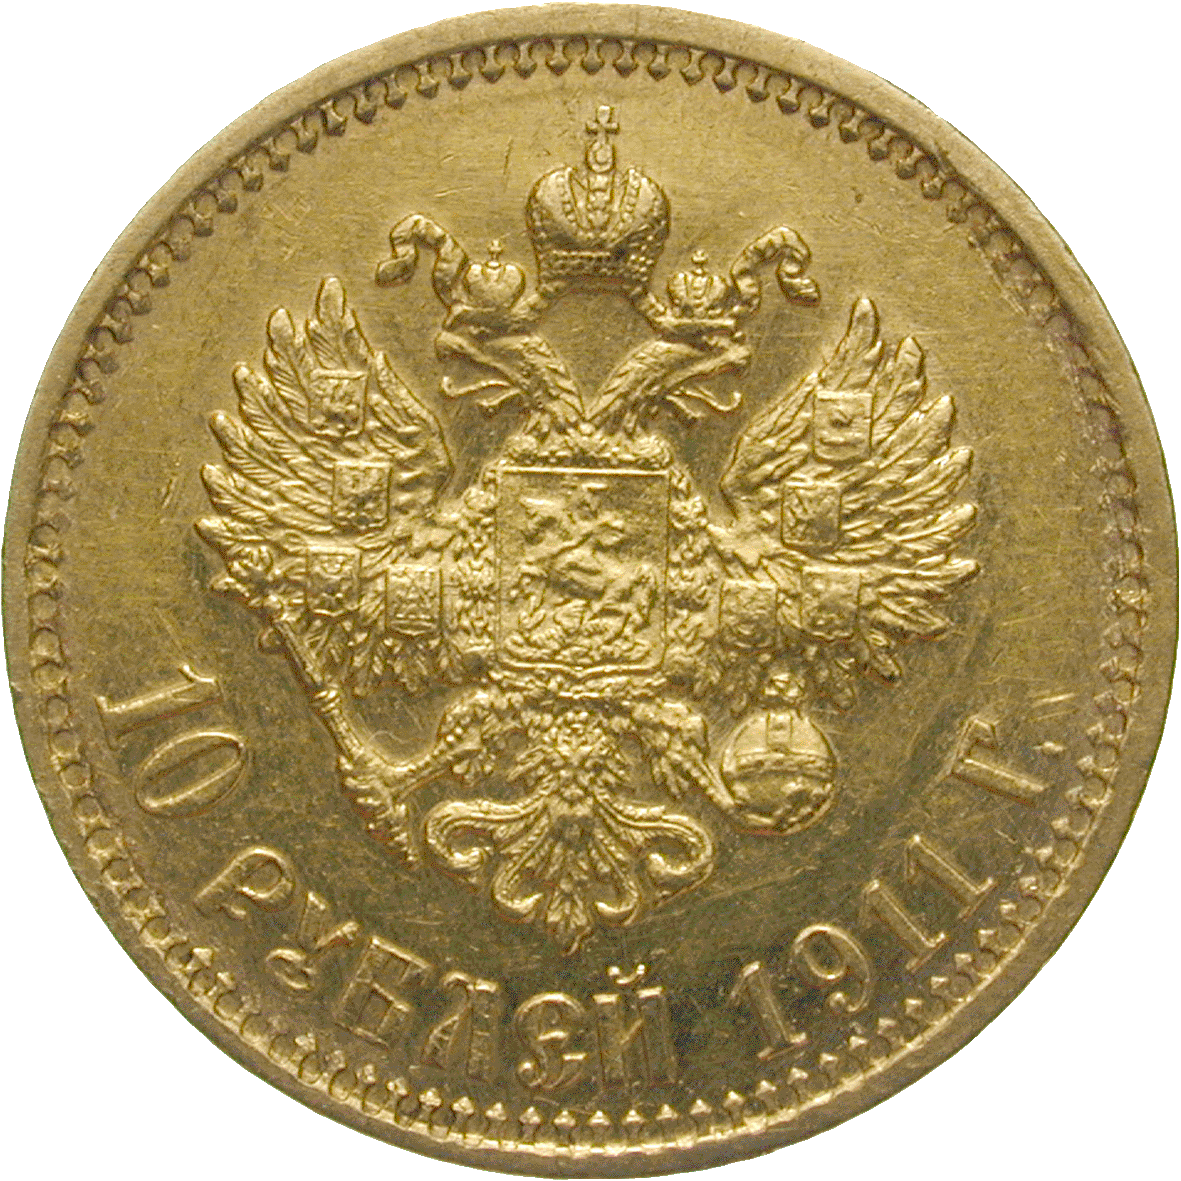 Russian Empire, Nicholas II 10 Rubles 1911 (reverse)